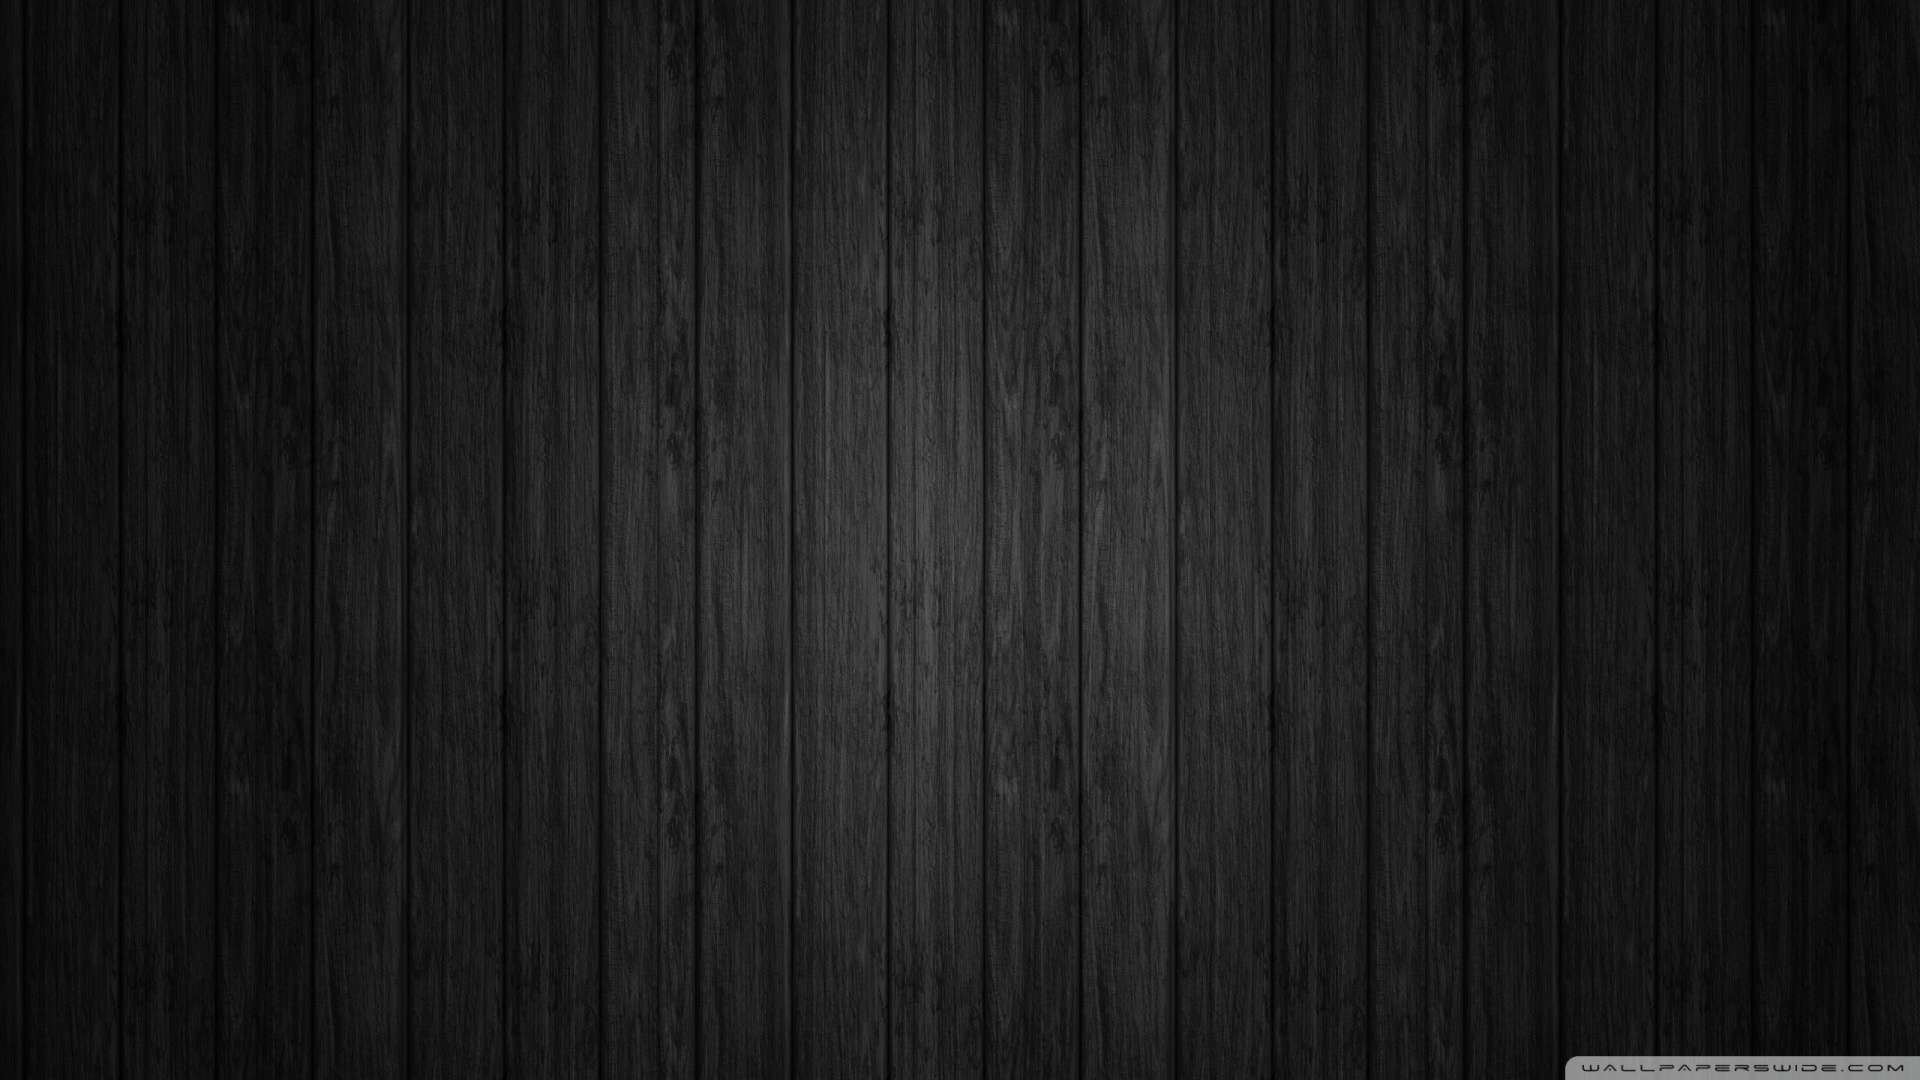 1920x1080 Wallpaper: Black Background Wood Wallpaper 1080p HD. Upload at .